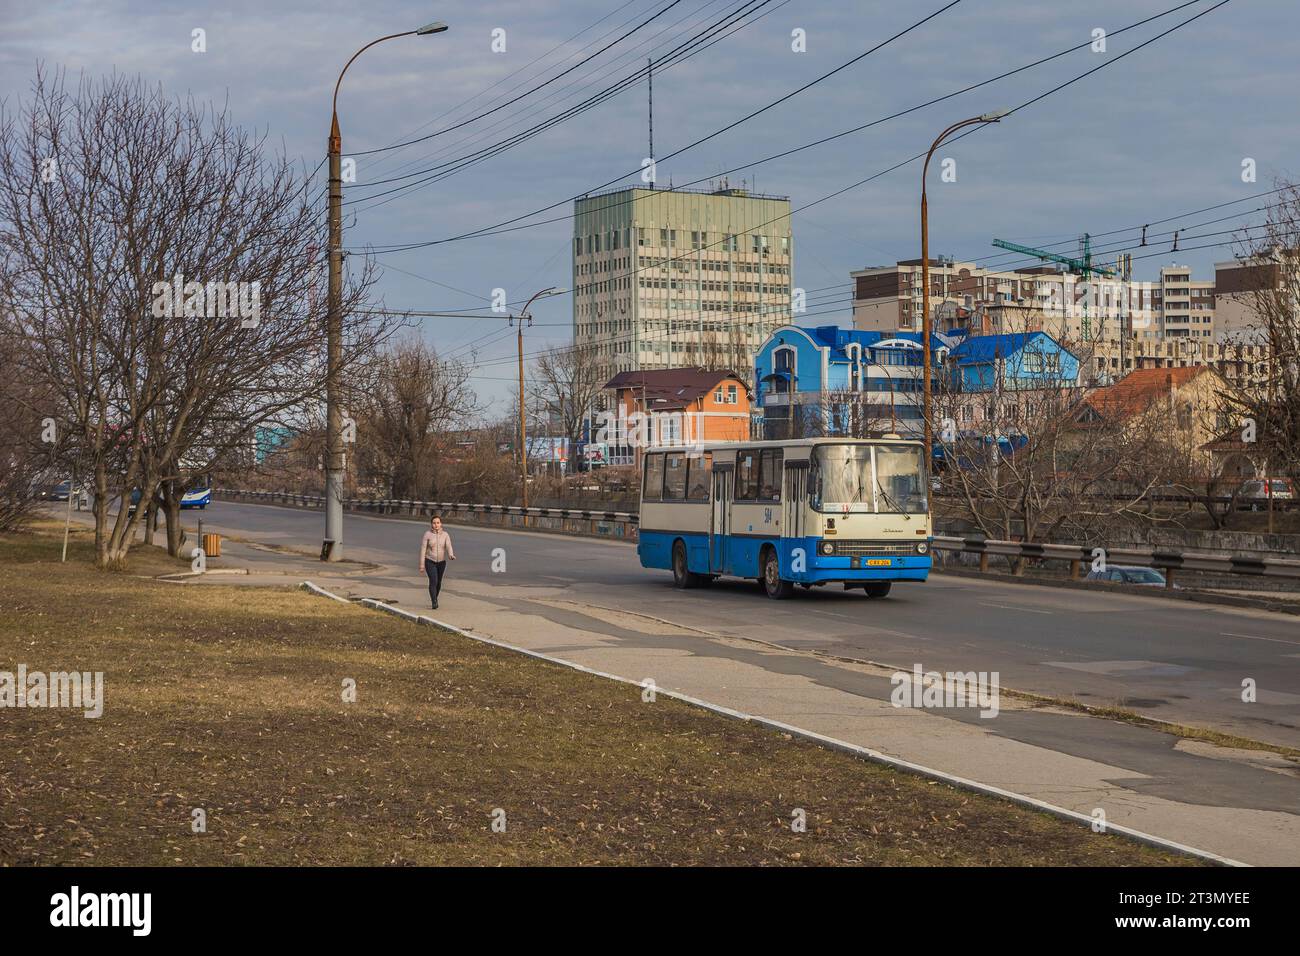 17.02.2020. Moldova, Chisinau. Ikarus 260 on urban route. Stock Photo